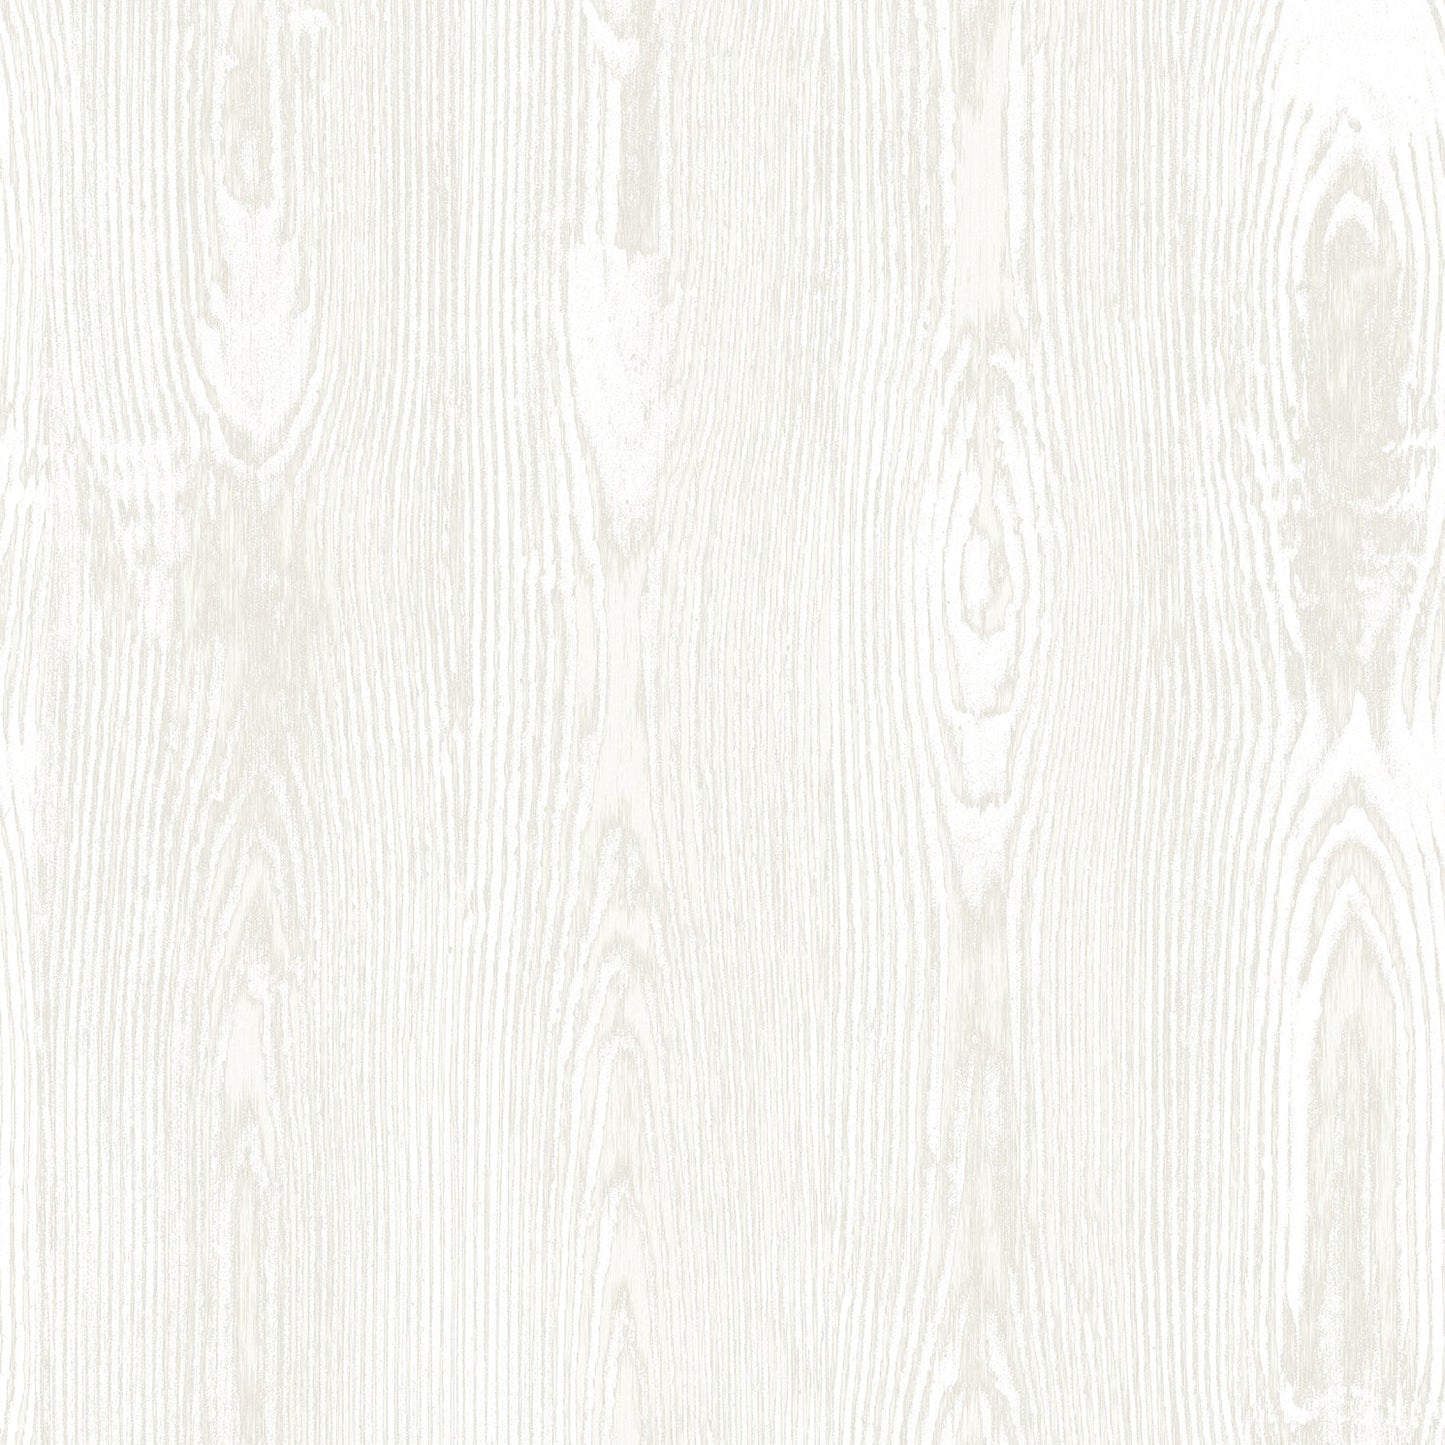 Buy 2959-SDM2001 Textural Essentials Jaxson White Faux Wood White Brewster Wallpaper